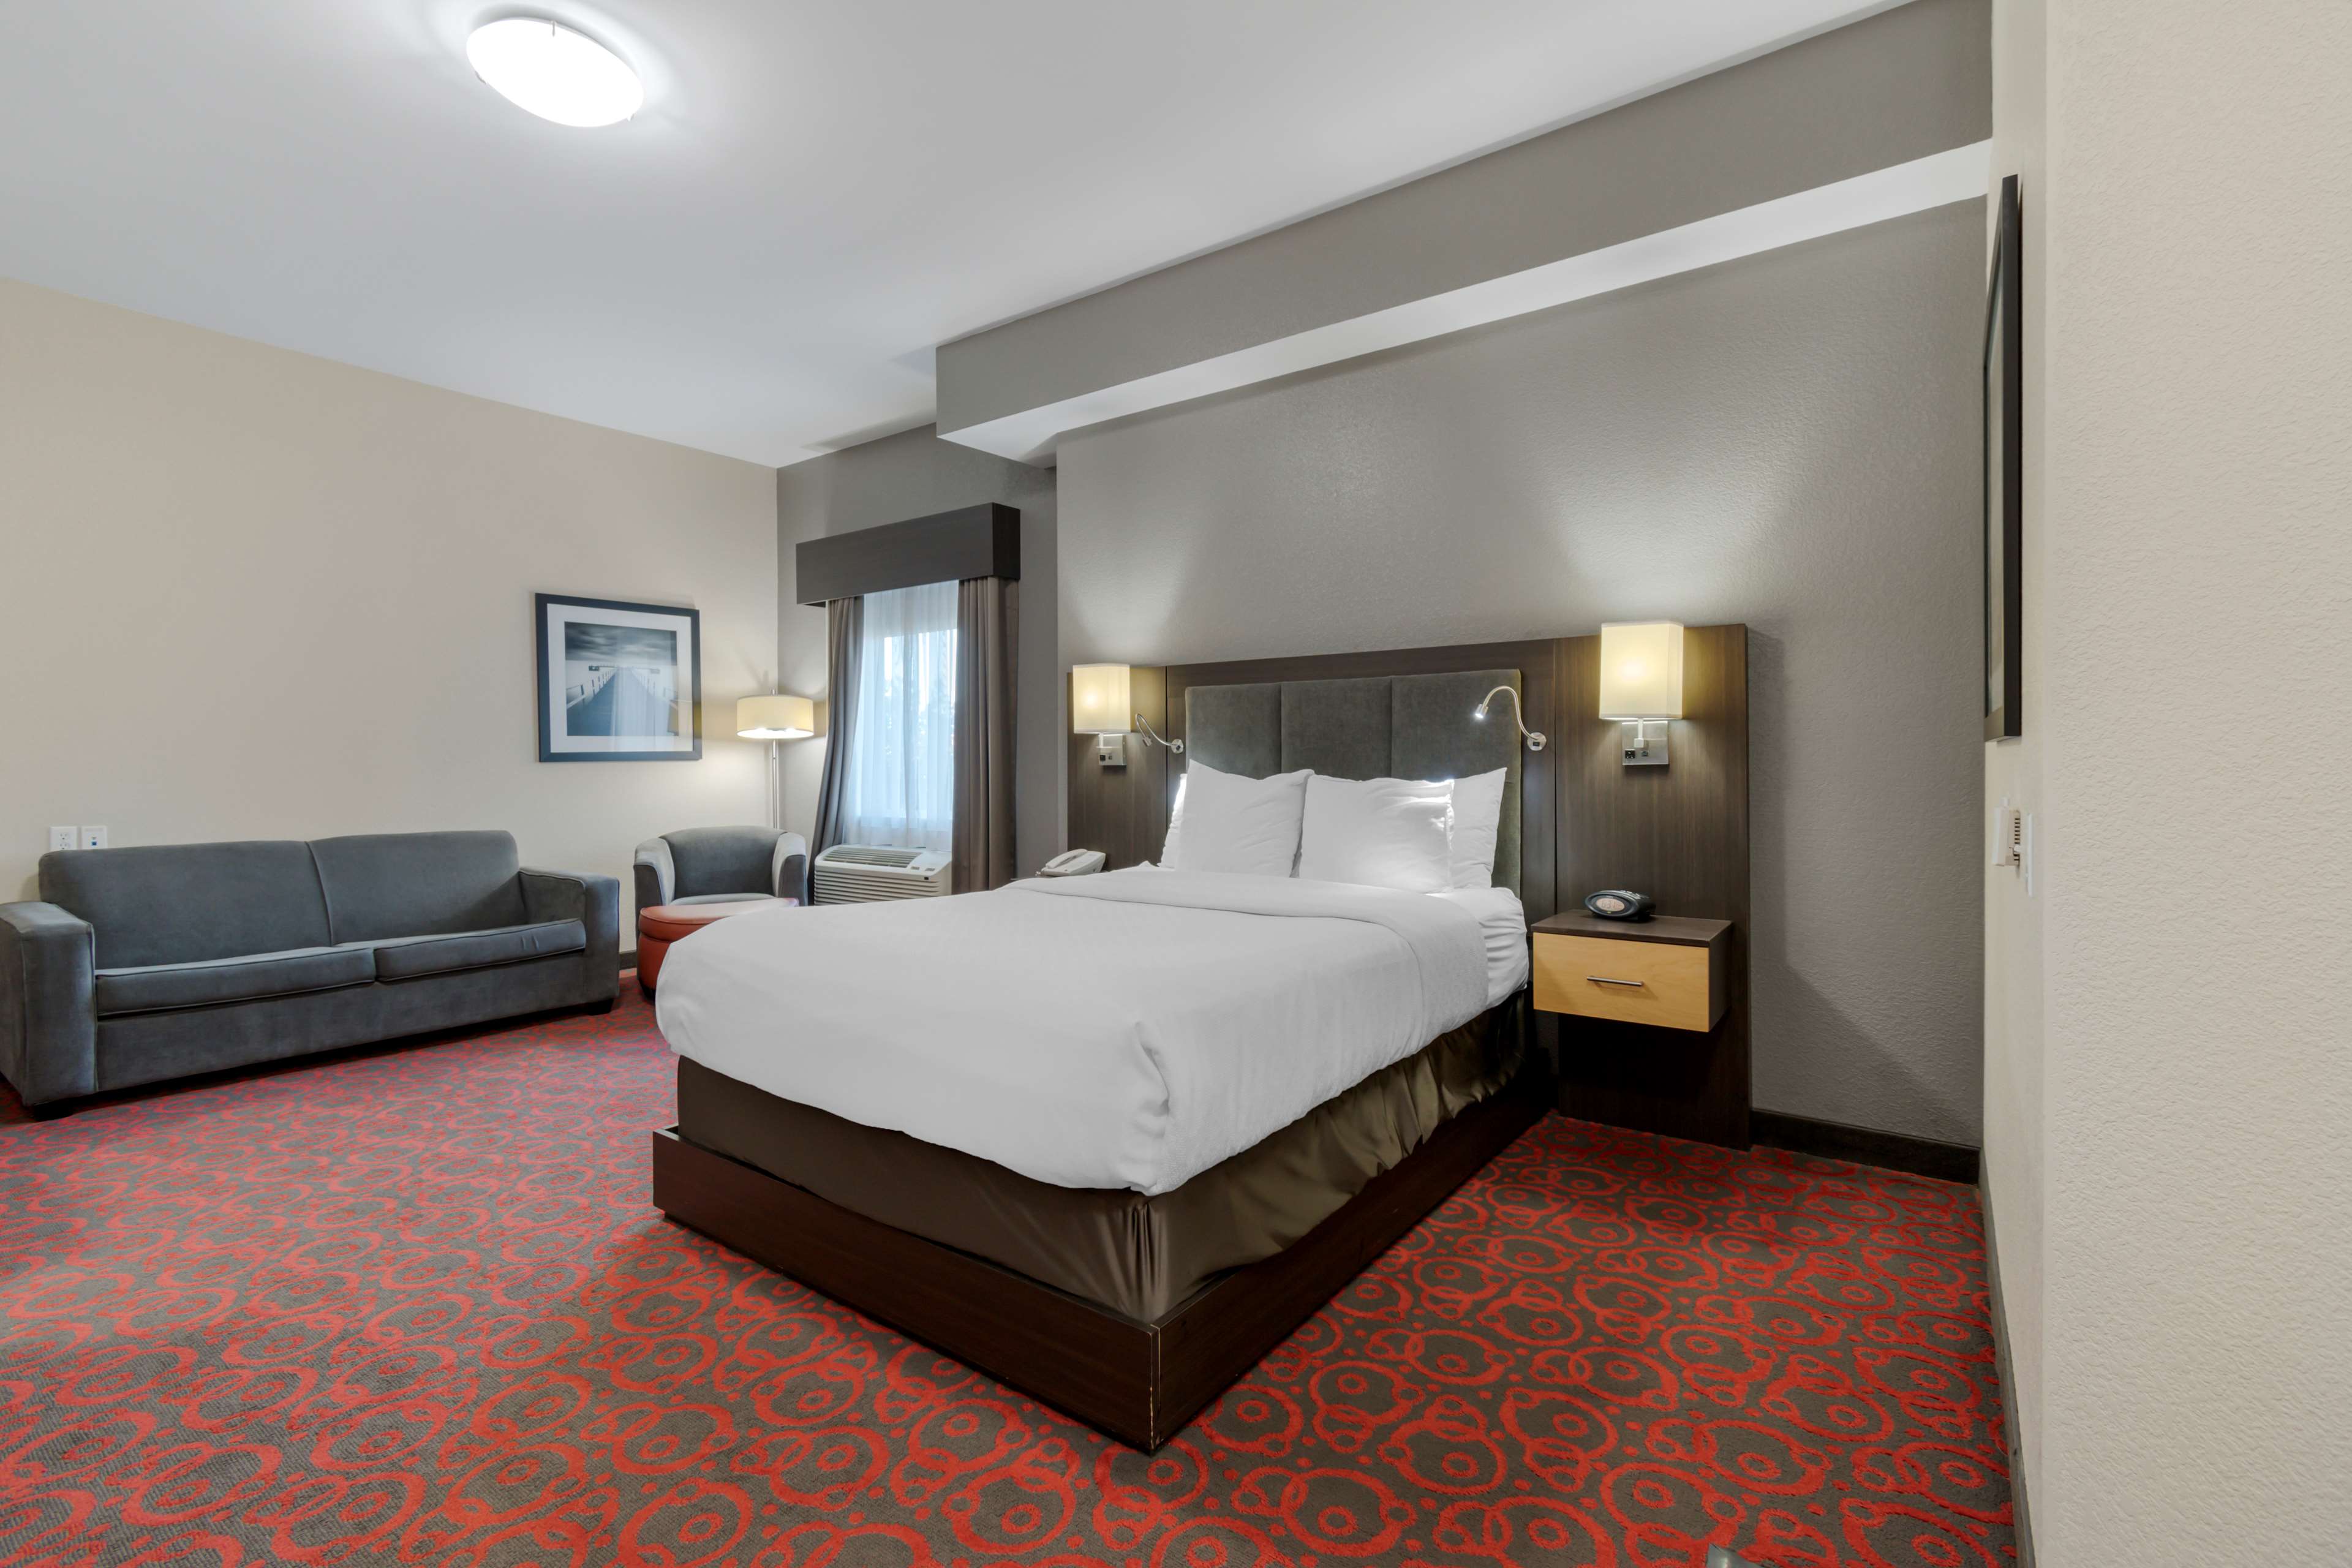 CS Best Western Plus Eastgate Inn & Suites Regina (306)352-7587